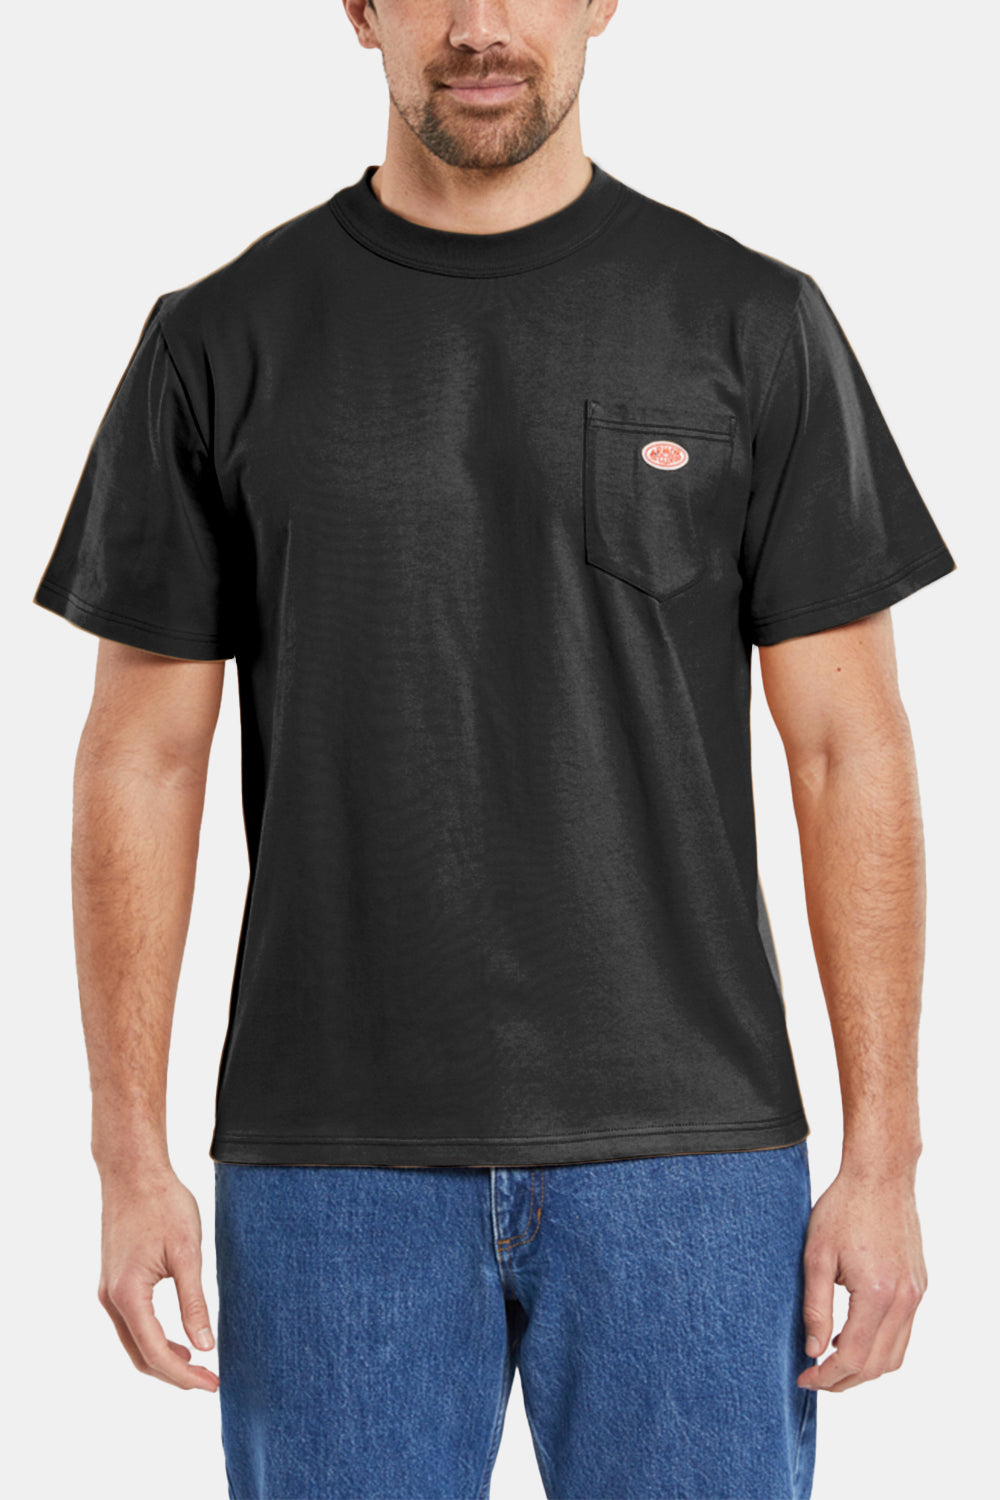 Armor Lux Heritage Pocket Organic Callac T-Shirt (Noir Black)